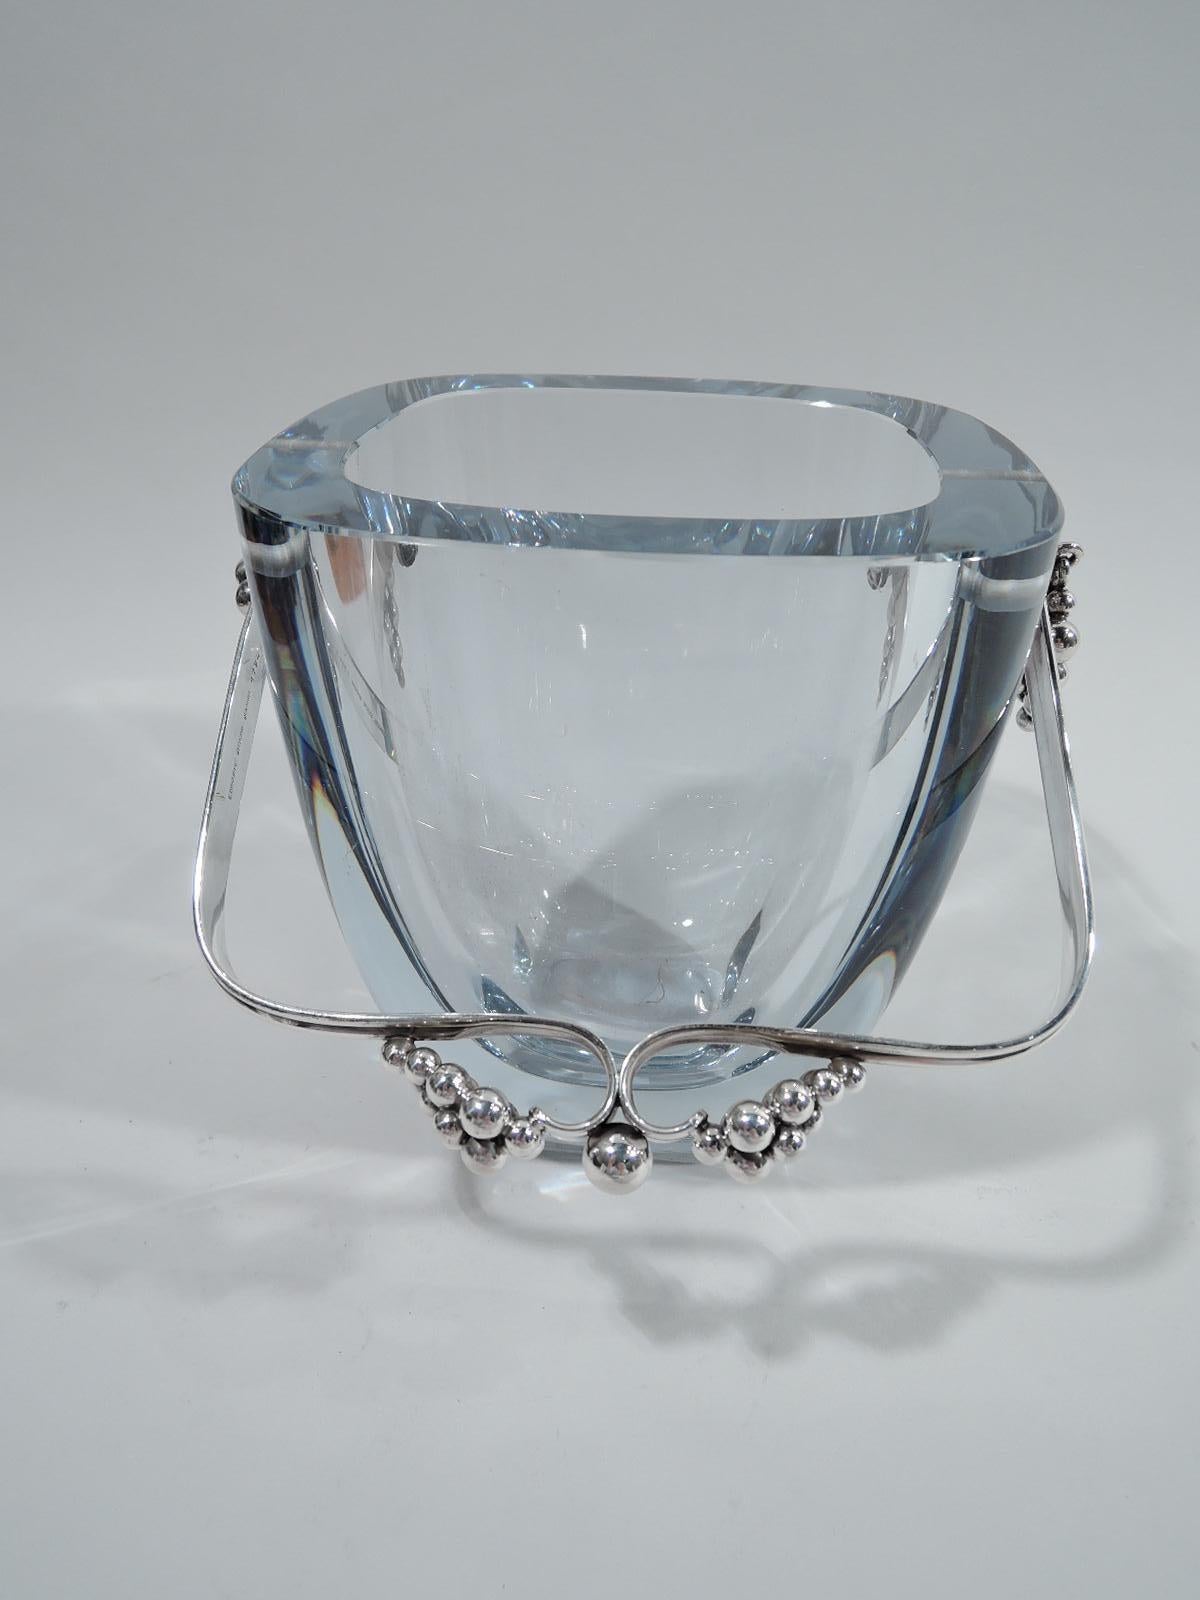 Scandinavian Modern Danish Mid-Century Modern Sterling Silver and Glass Ice Bucket